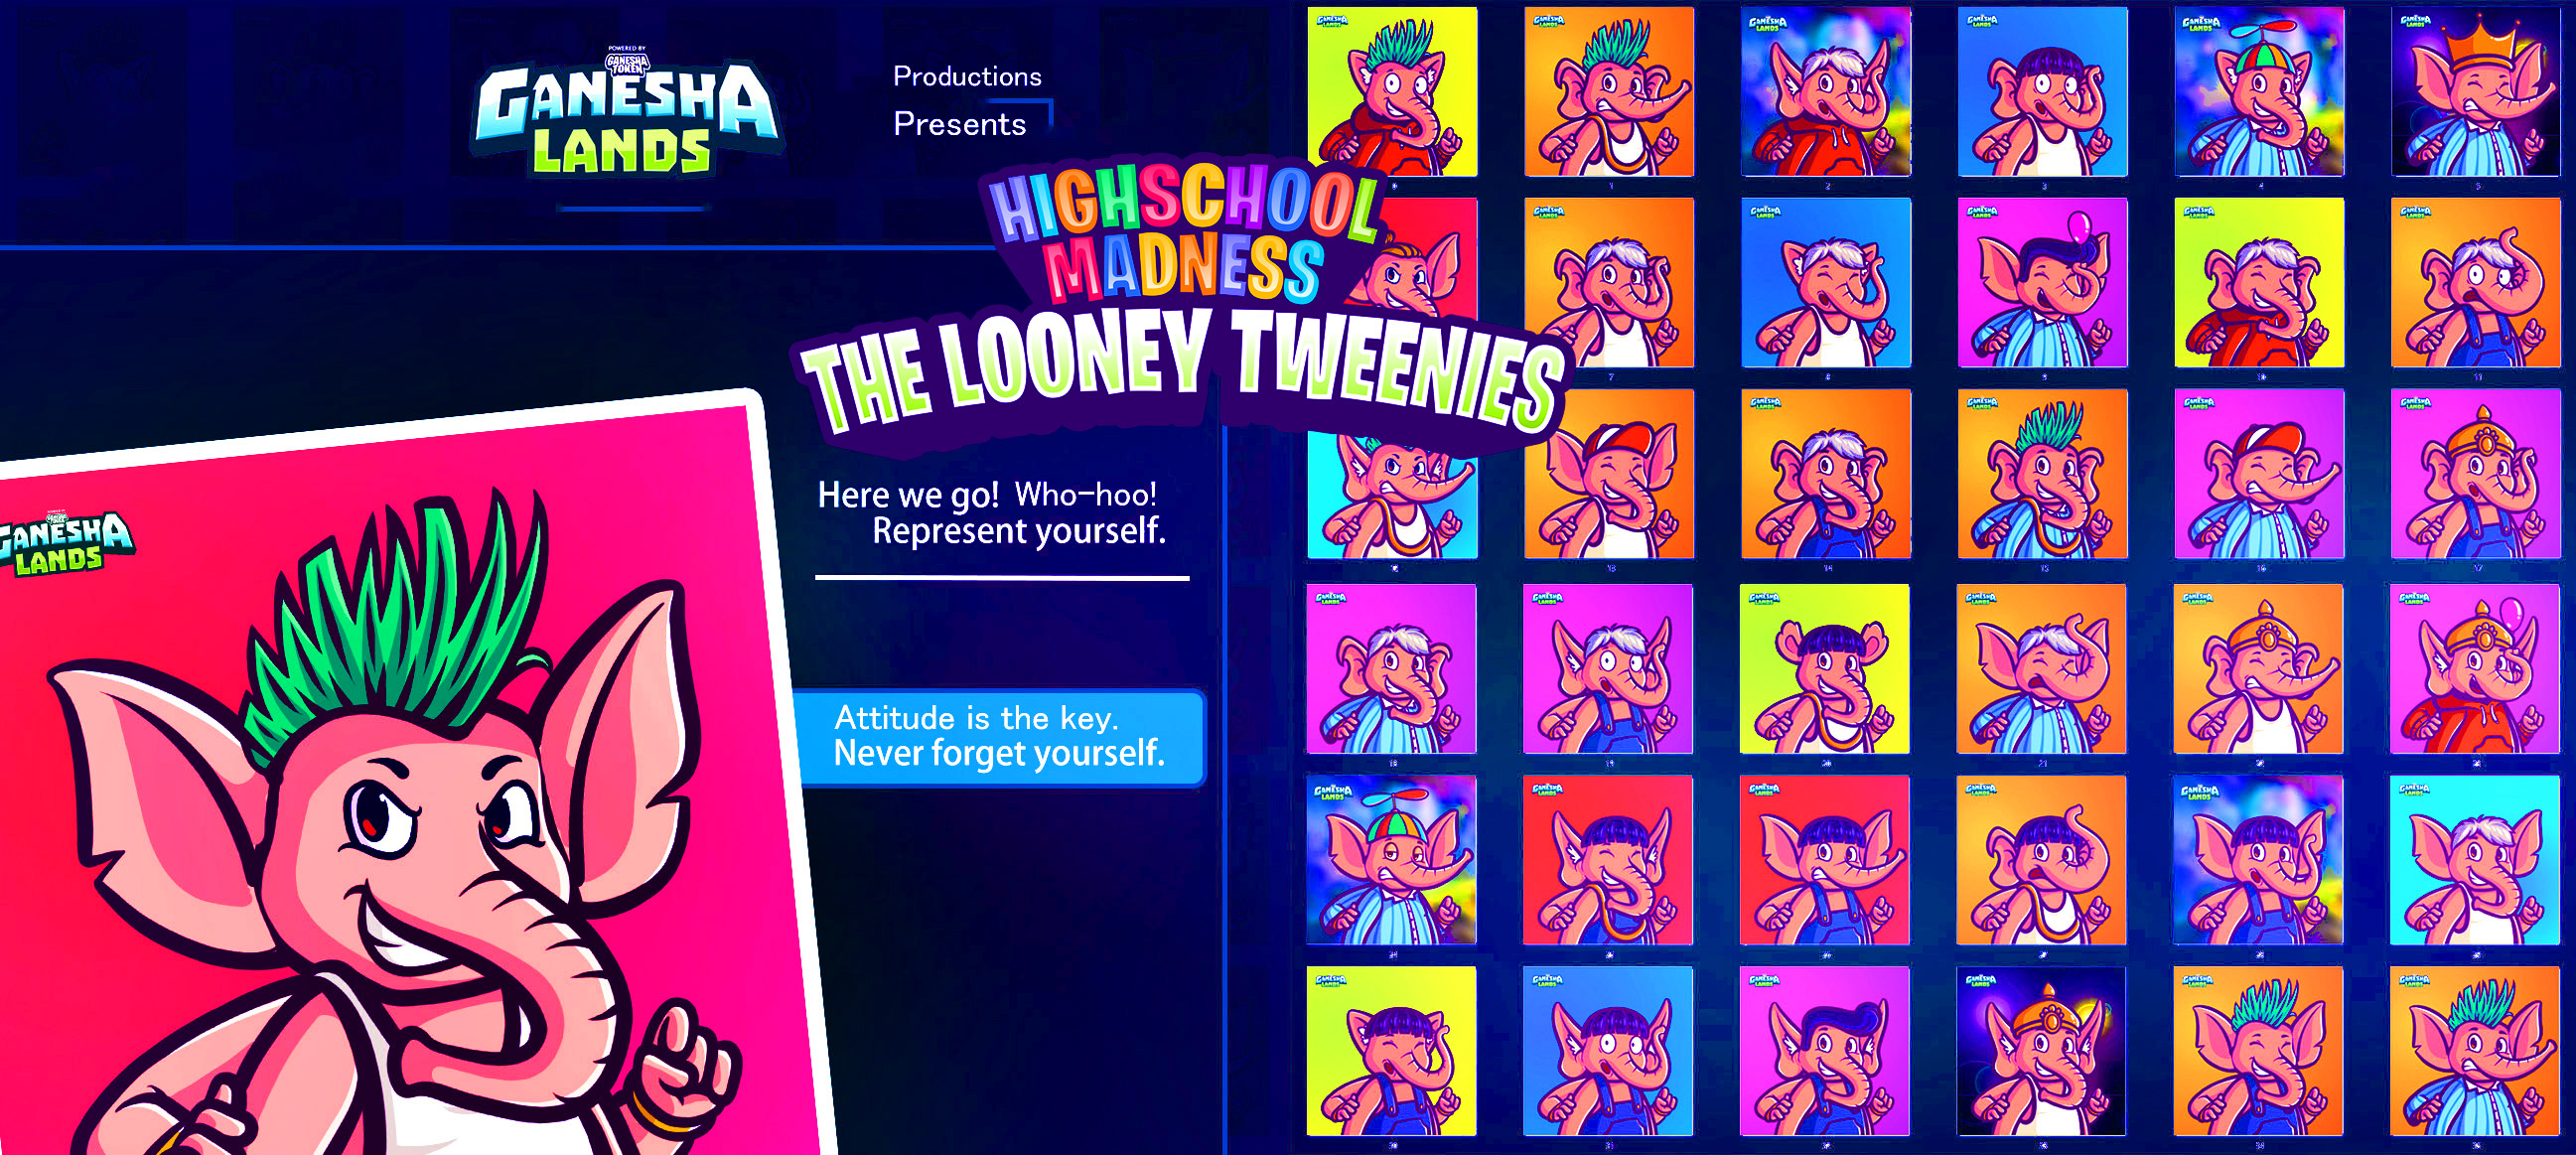 The Looney Tweenies Highschool Madness